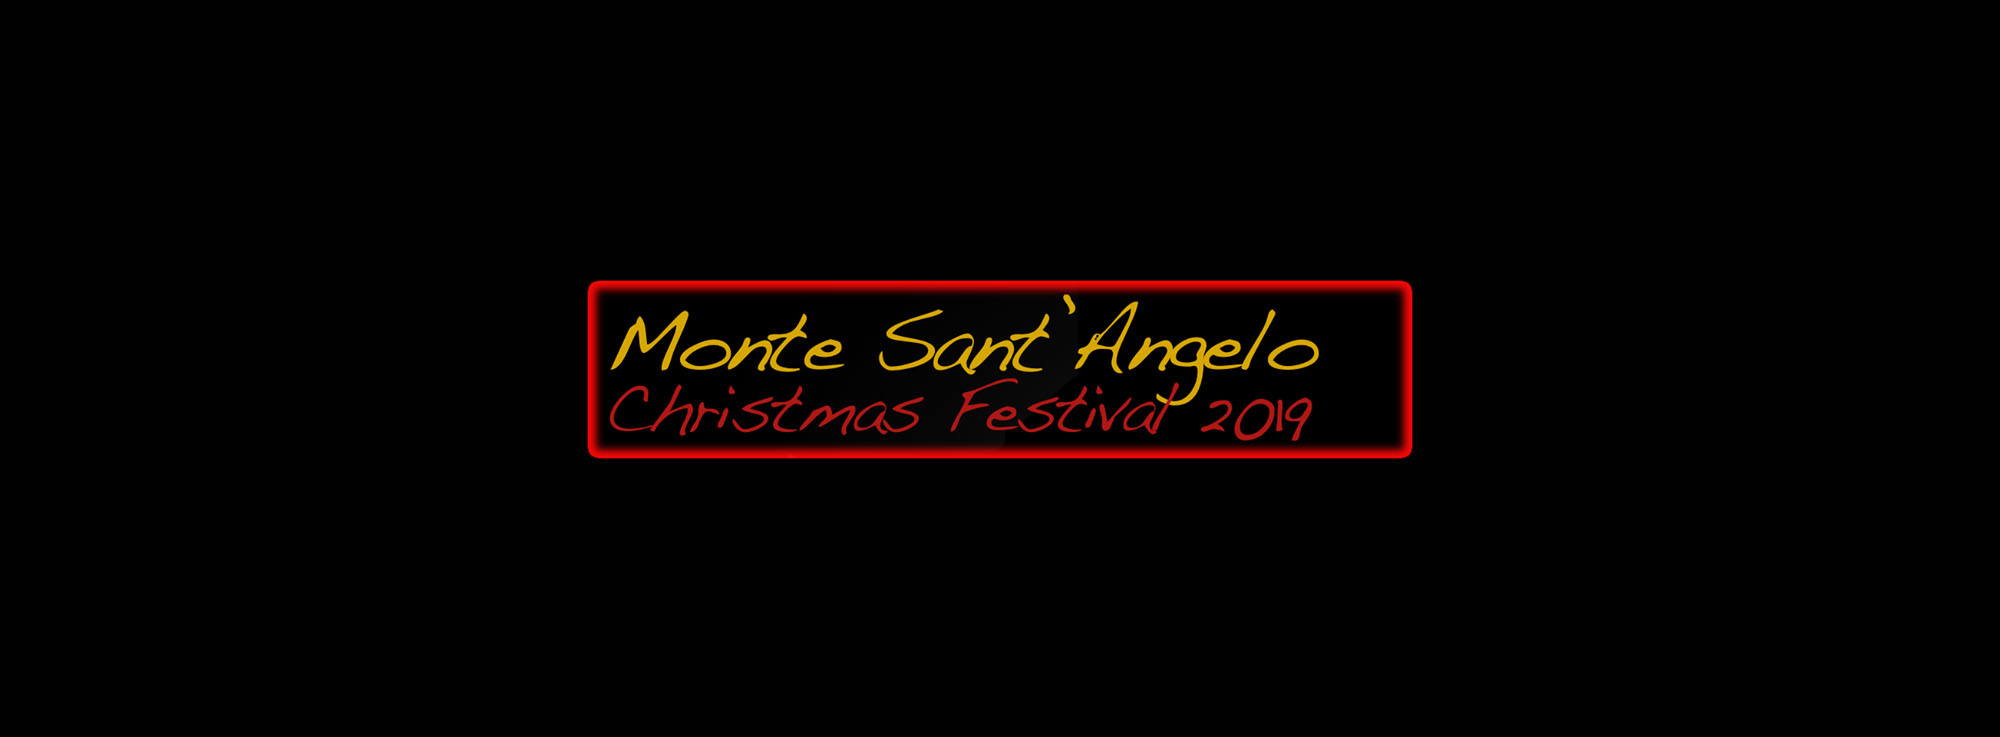 Monte Sant'Angelo: Monte Sant’Angelo Christmas Festival 2019